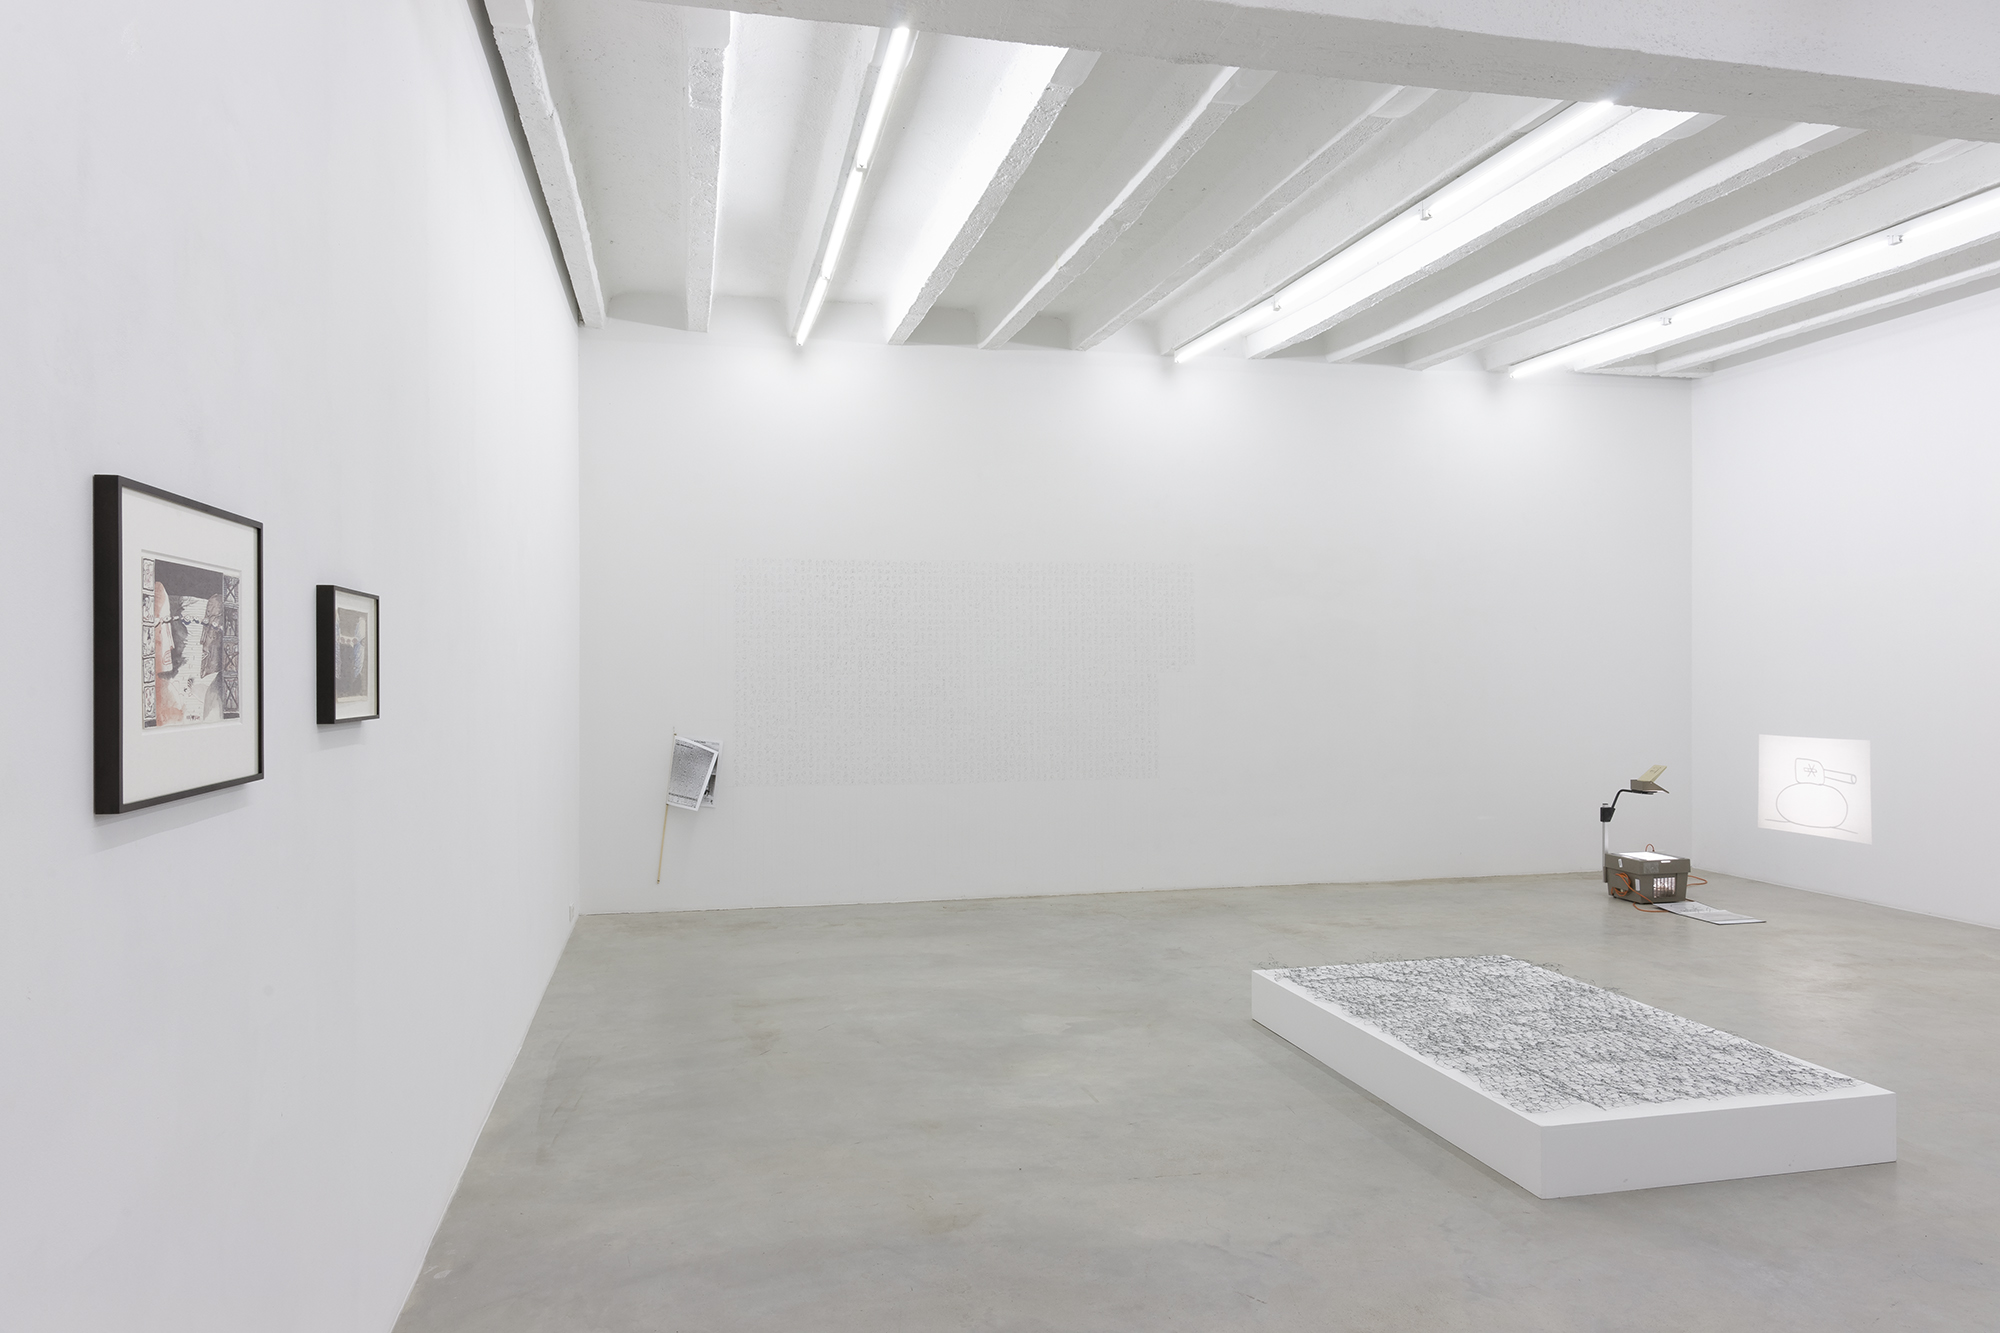 Dan Perjovschi: Need to Draw, exhibition view, Galerija Gregor Podnar, Berlin, 2014. Photo: Marcus Schneider